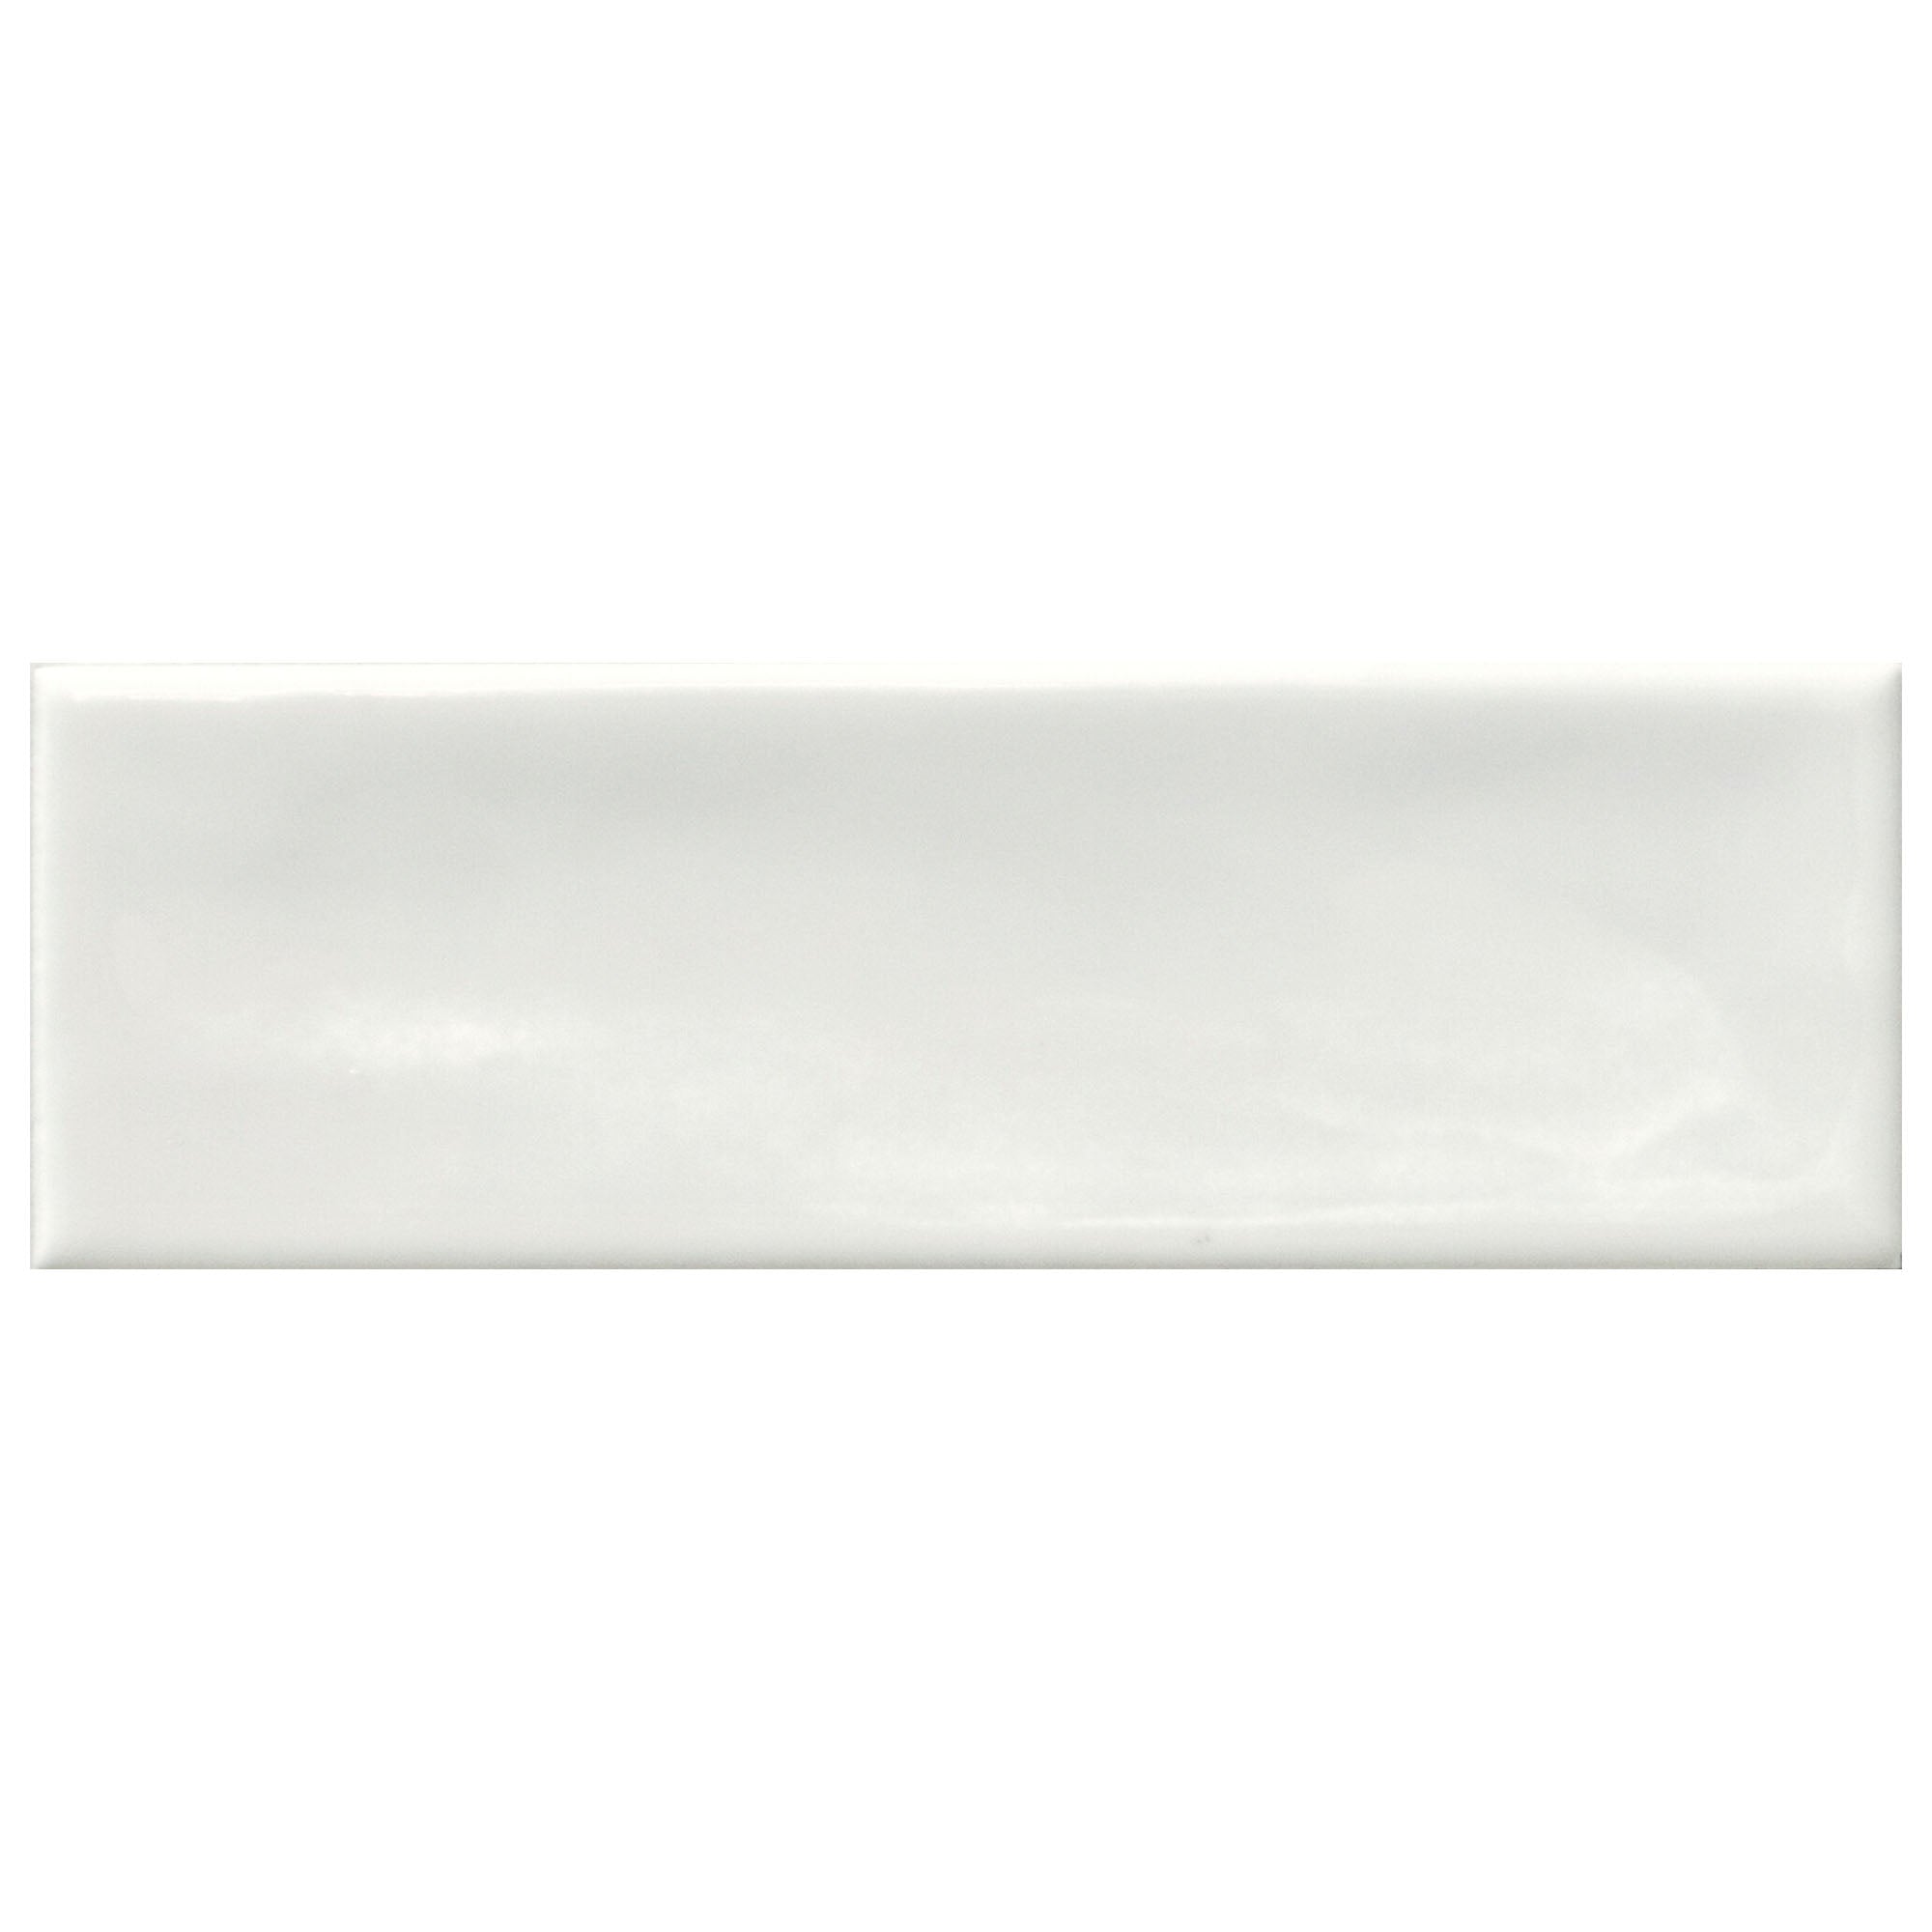 glint white porcelain wall tile 5x15cm gloss